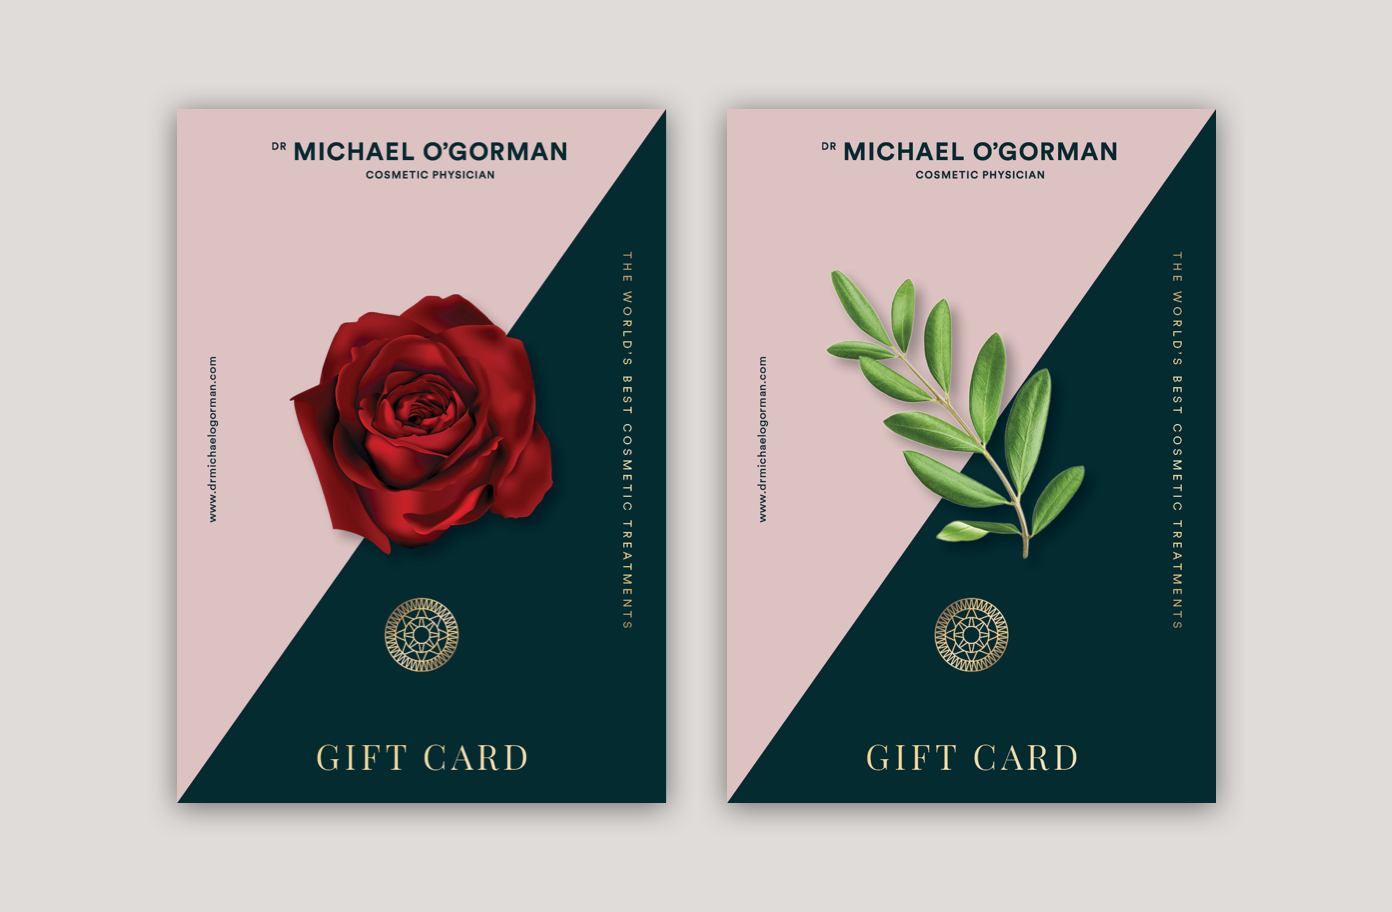 Gift cards – Dr Michael O'Gorman